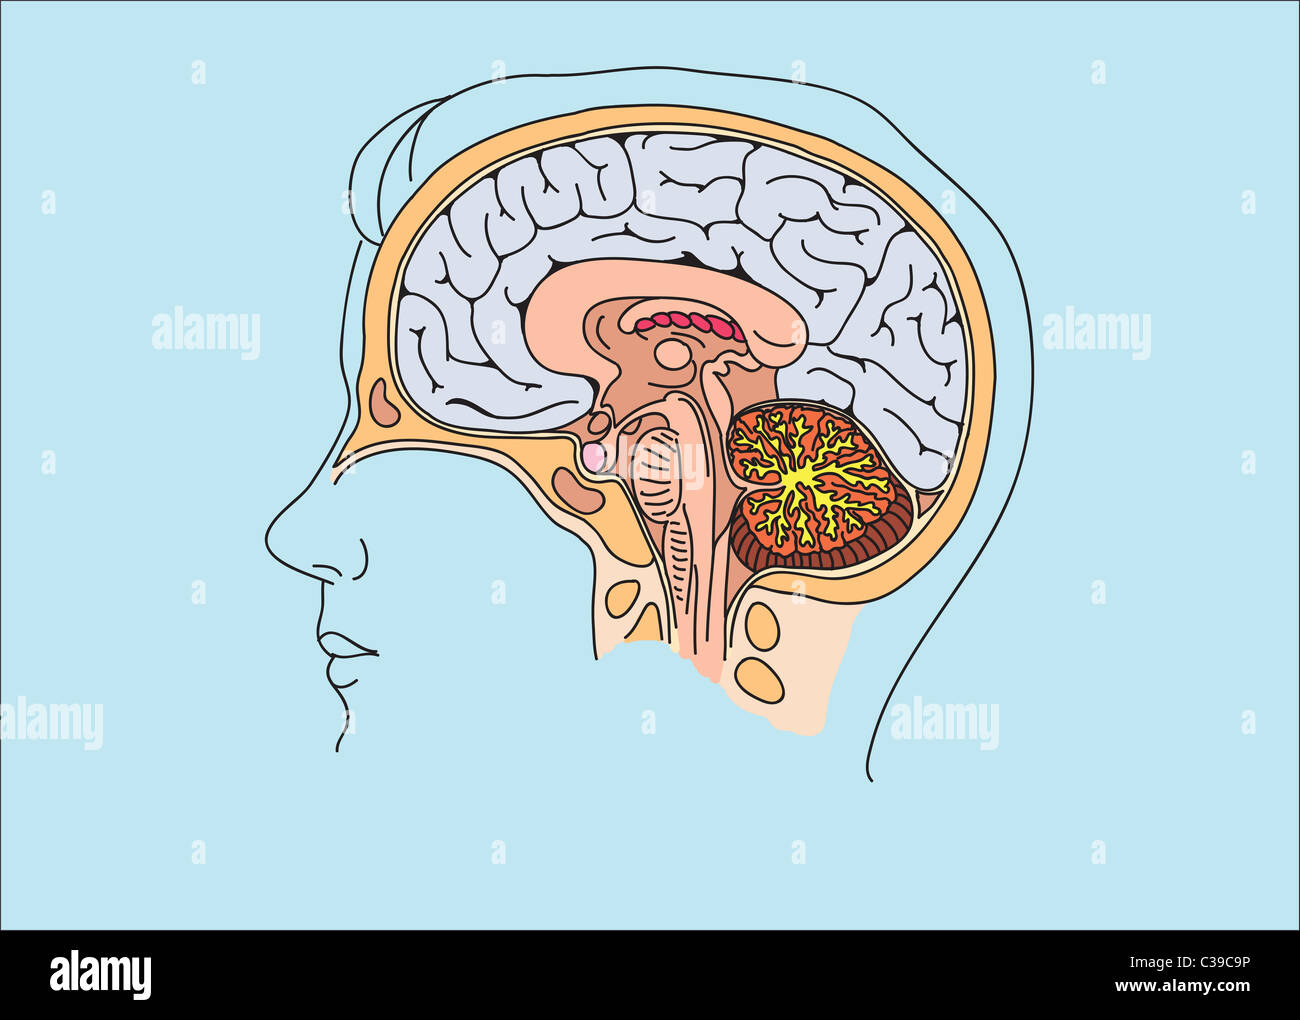 Structure of human brain illustration Stock Photo